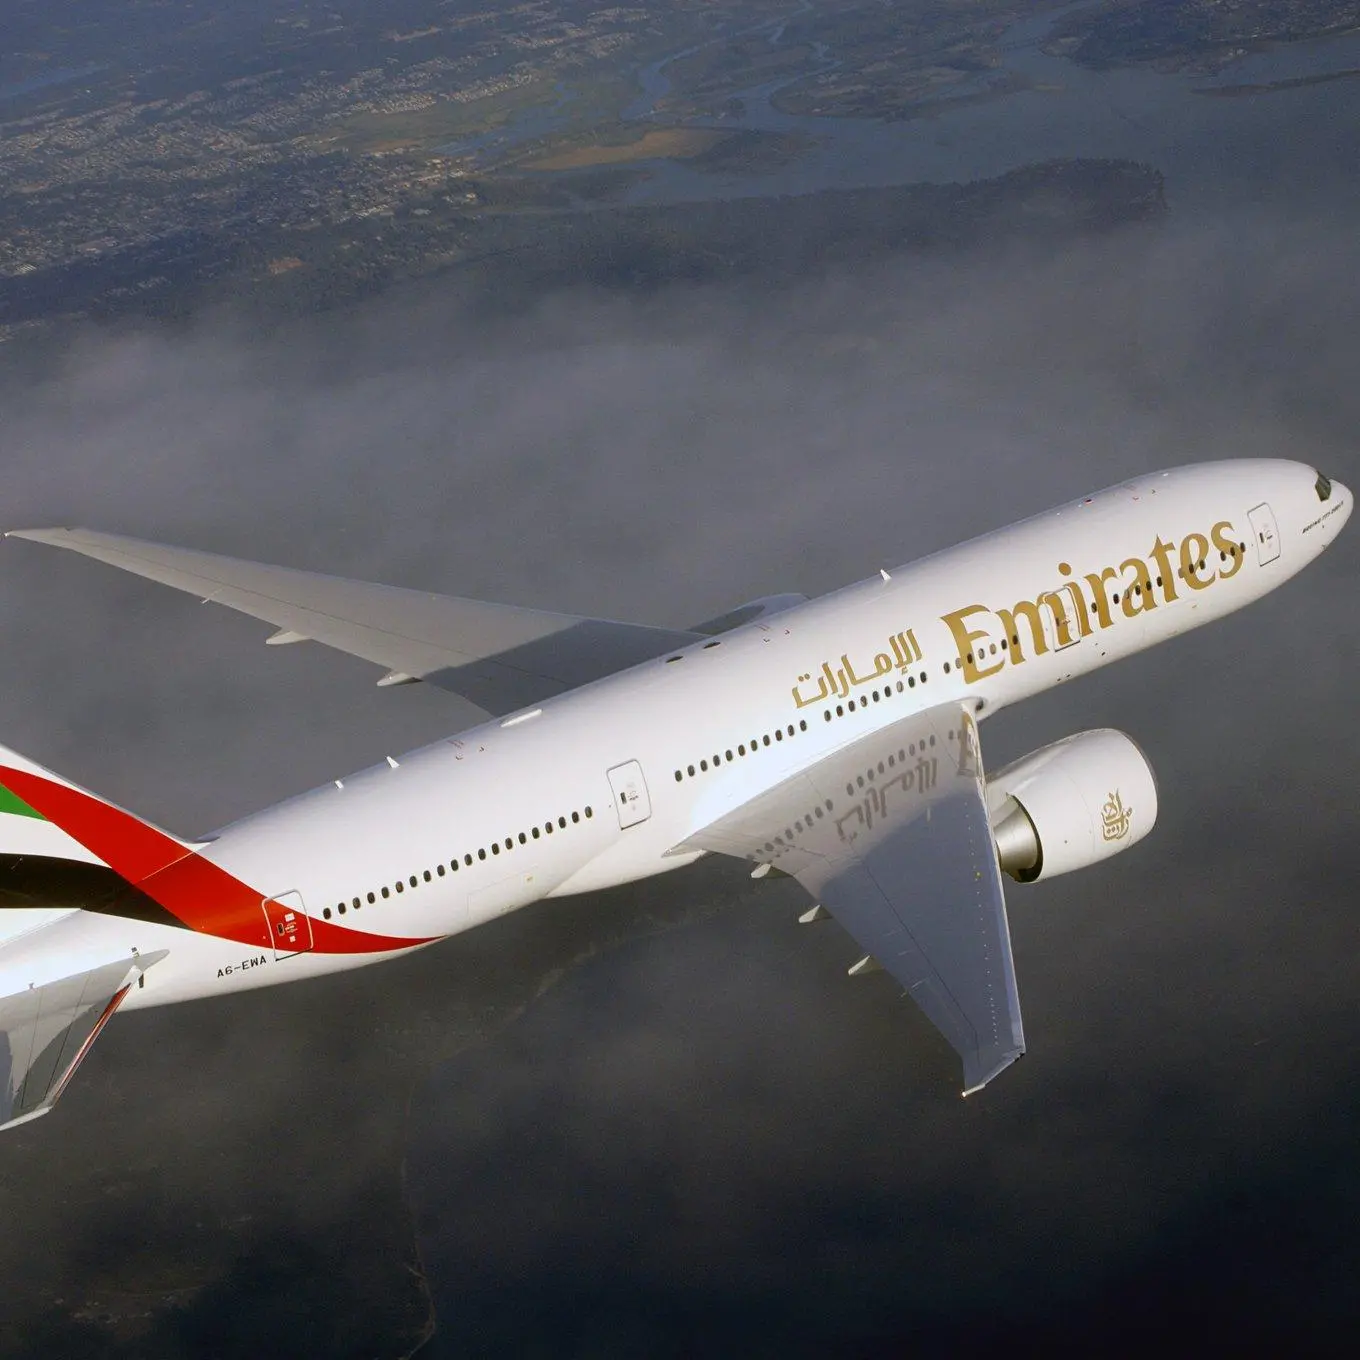 Dubai flights: Emirates issues alert as peak travel begins in 2 days